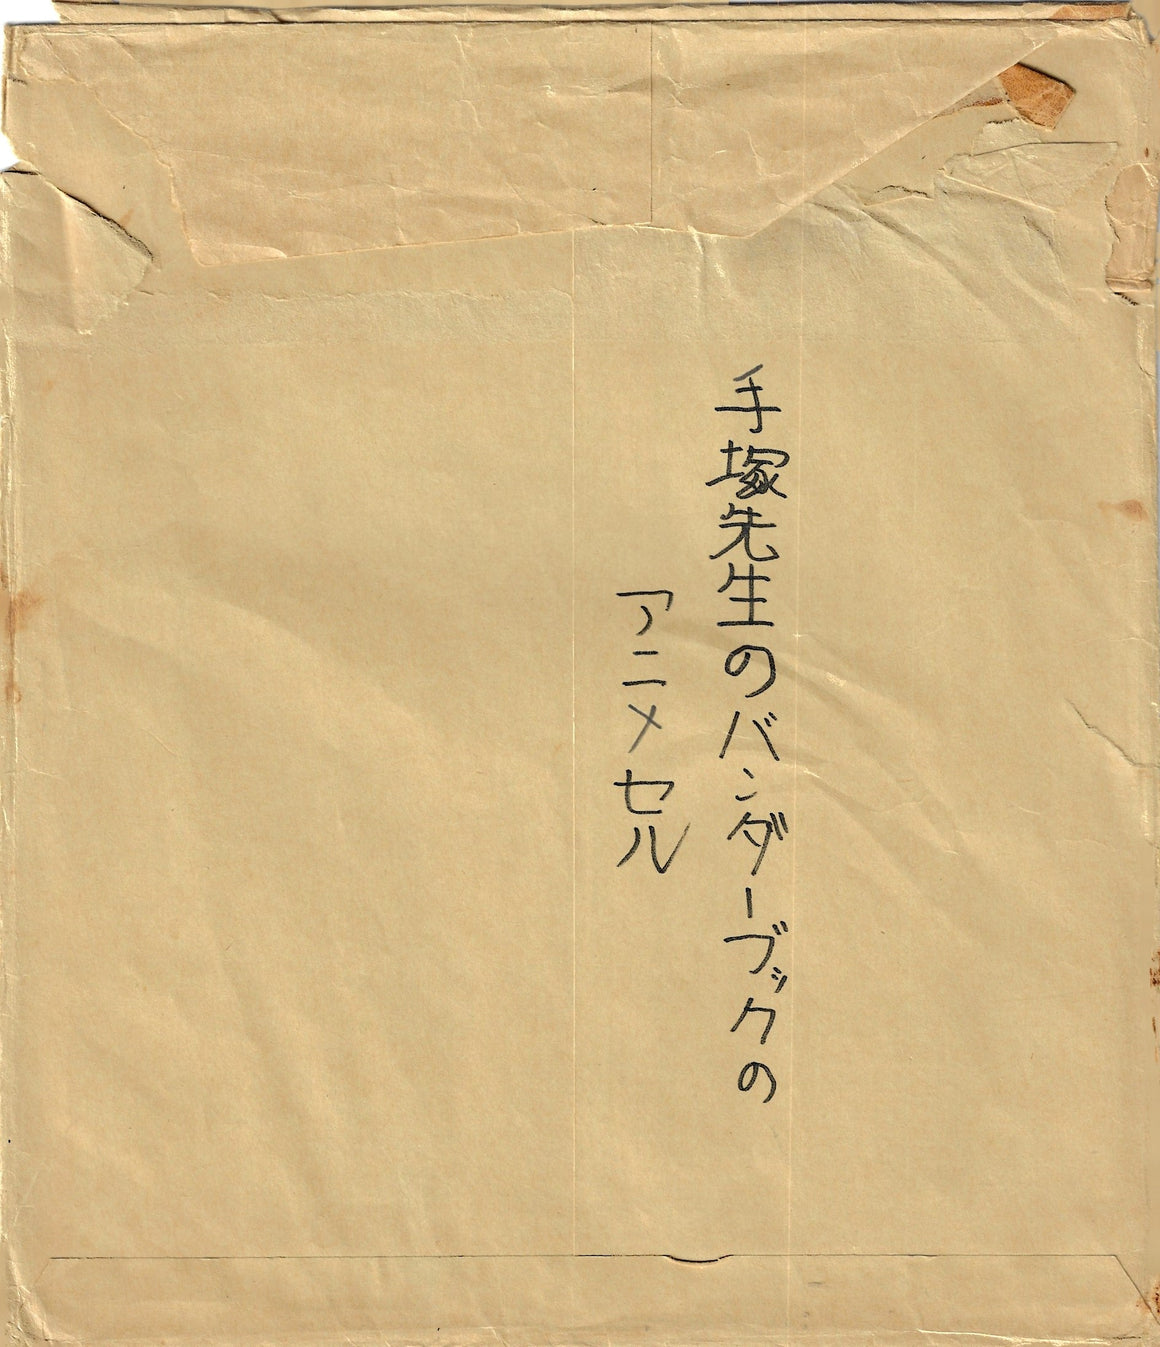 One Million Year Trip: Bandar Book - Black Jack - 1-layer Production Cel w/ Fan Correspondence signed by Tezuka Osamu